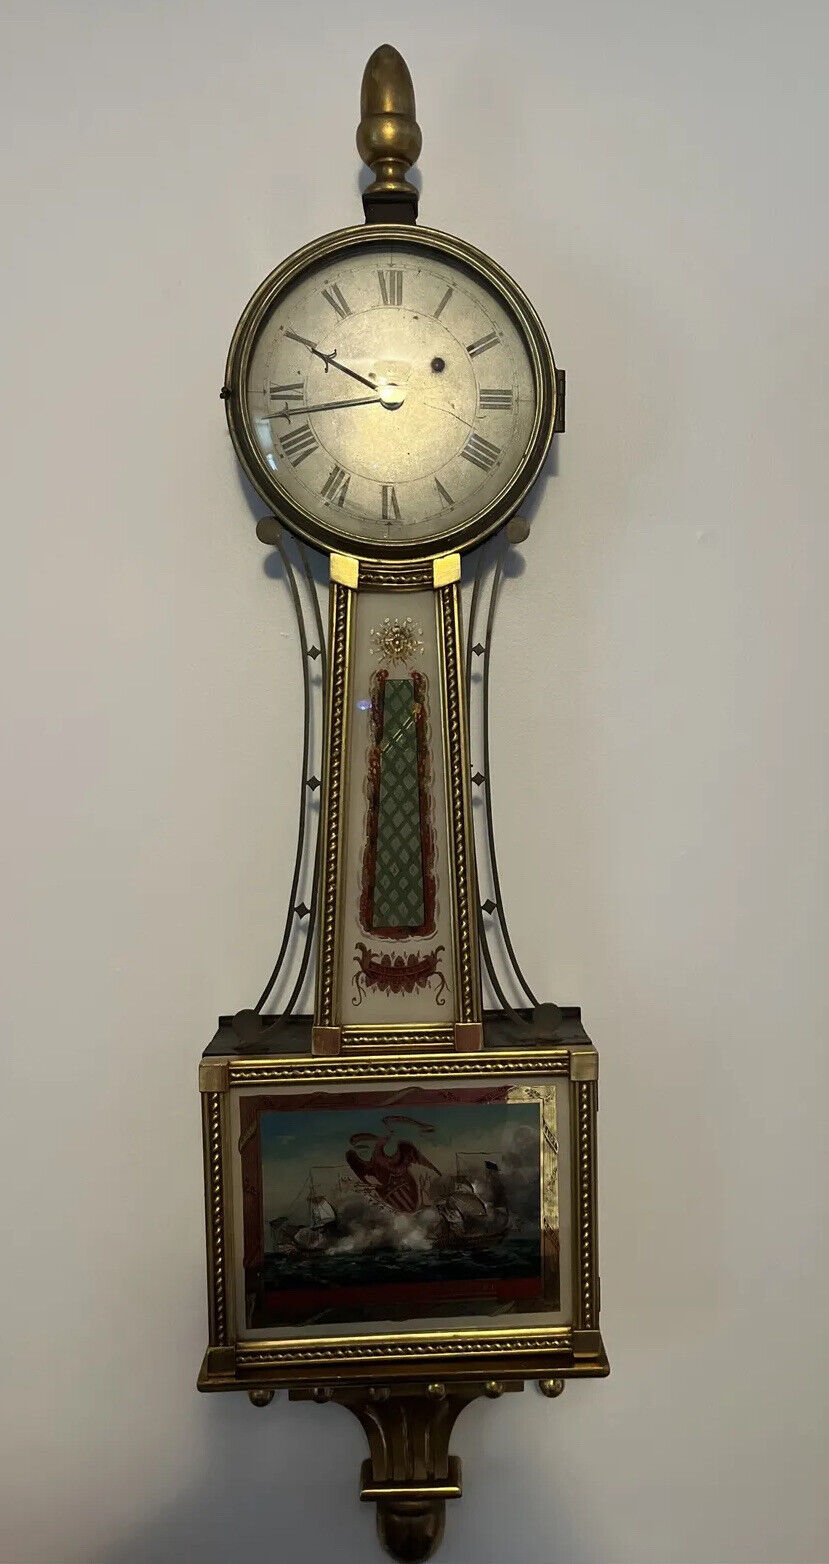 Willard Period Style / Type Banjo clock